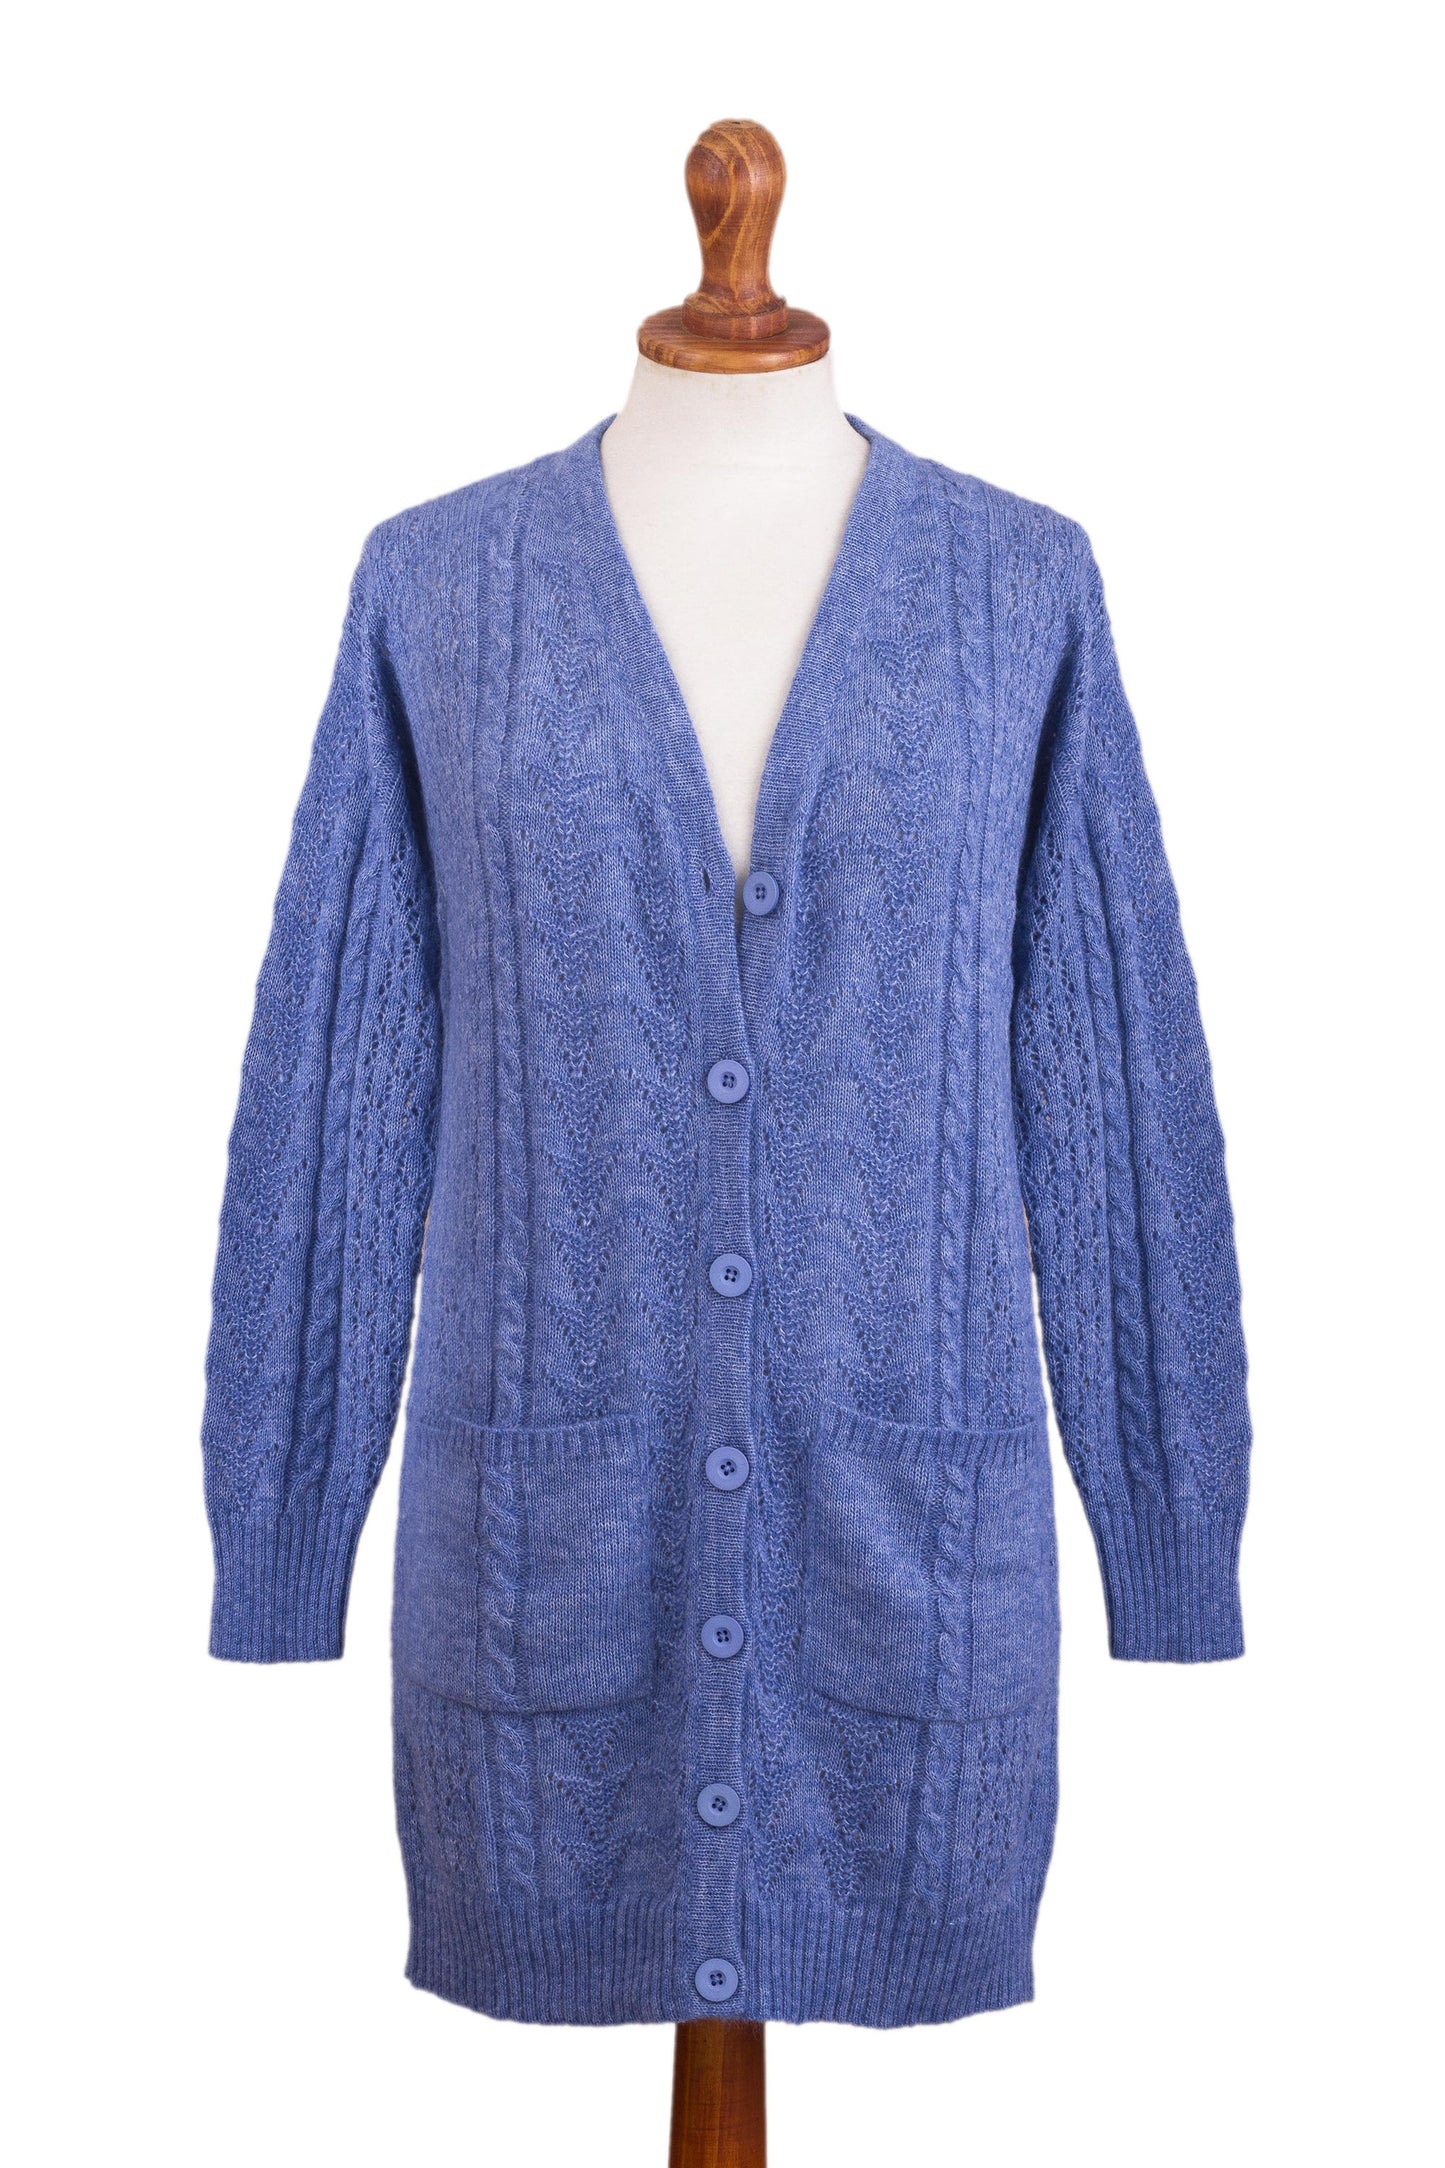 Eminence in Blue Blue Baby Alpaca Blend Cardigan Sweater